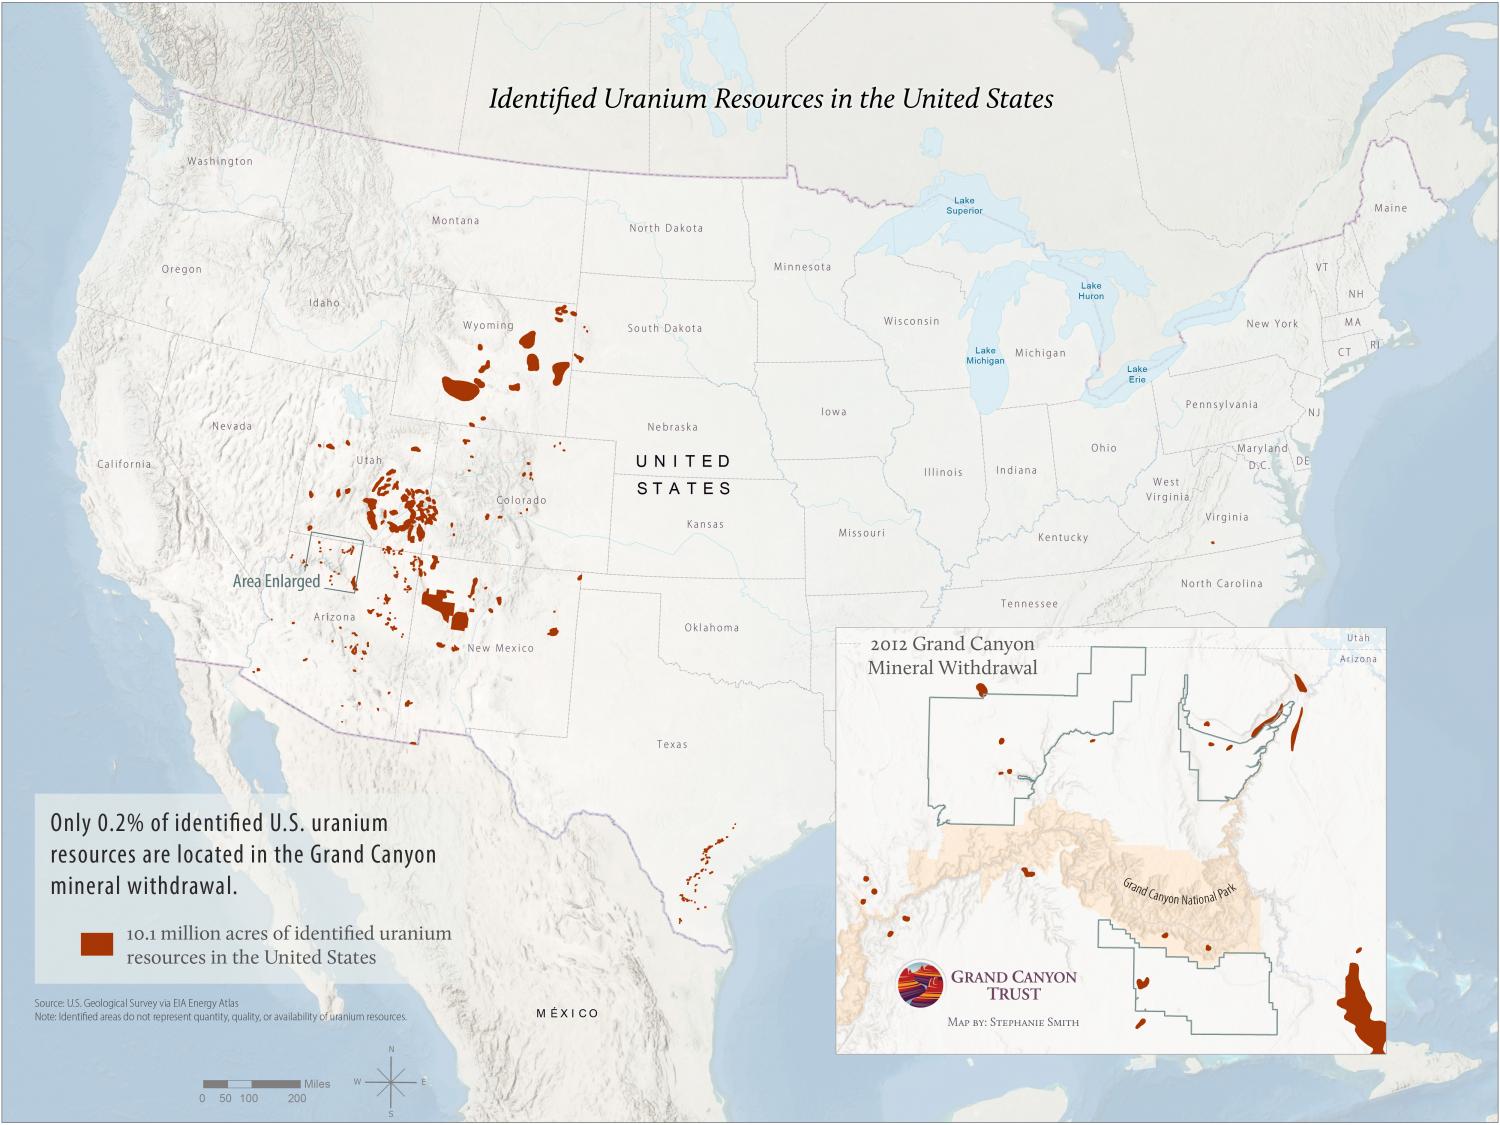 Identified uranium resources in the United States